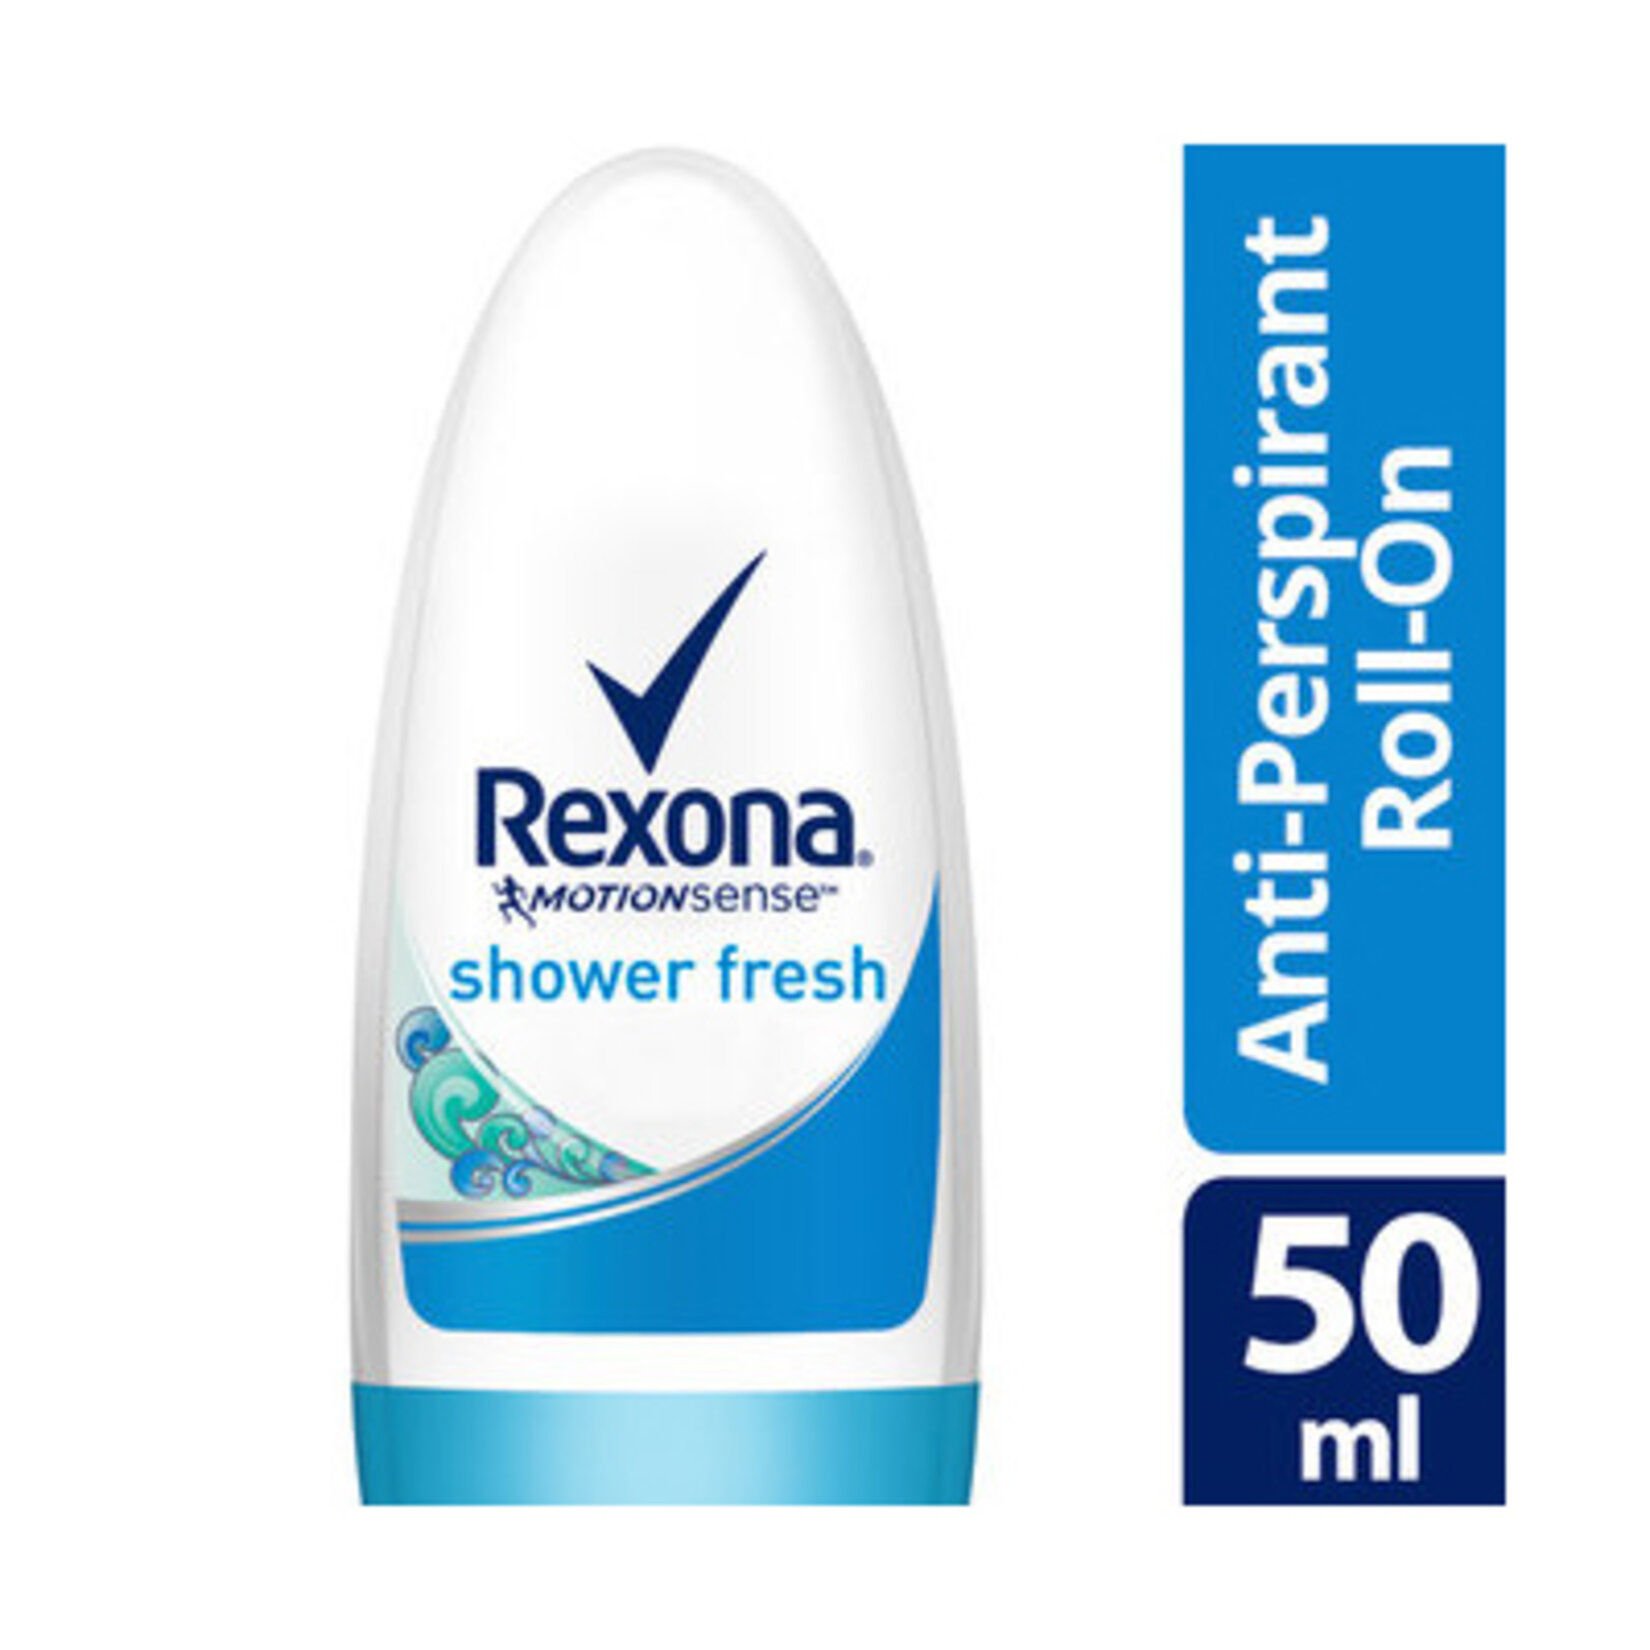 Shower fresh. Rexona Shower Fresh. Рексона шарик Fresh Shower.